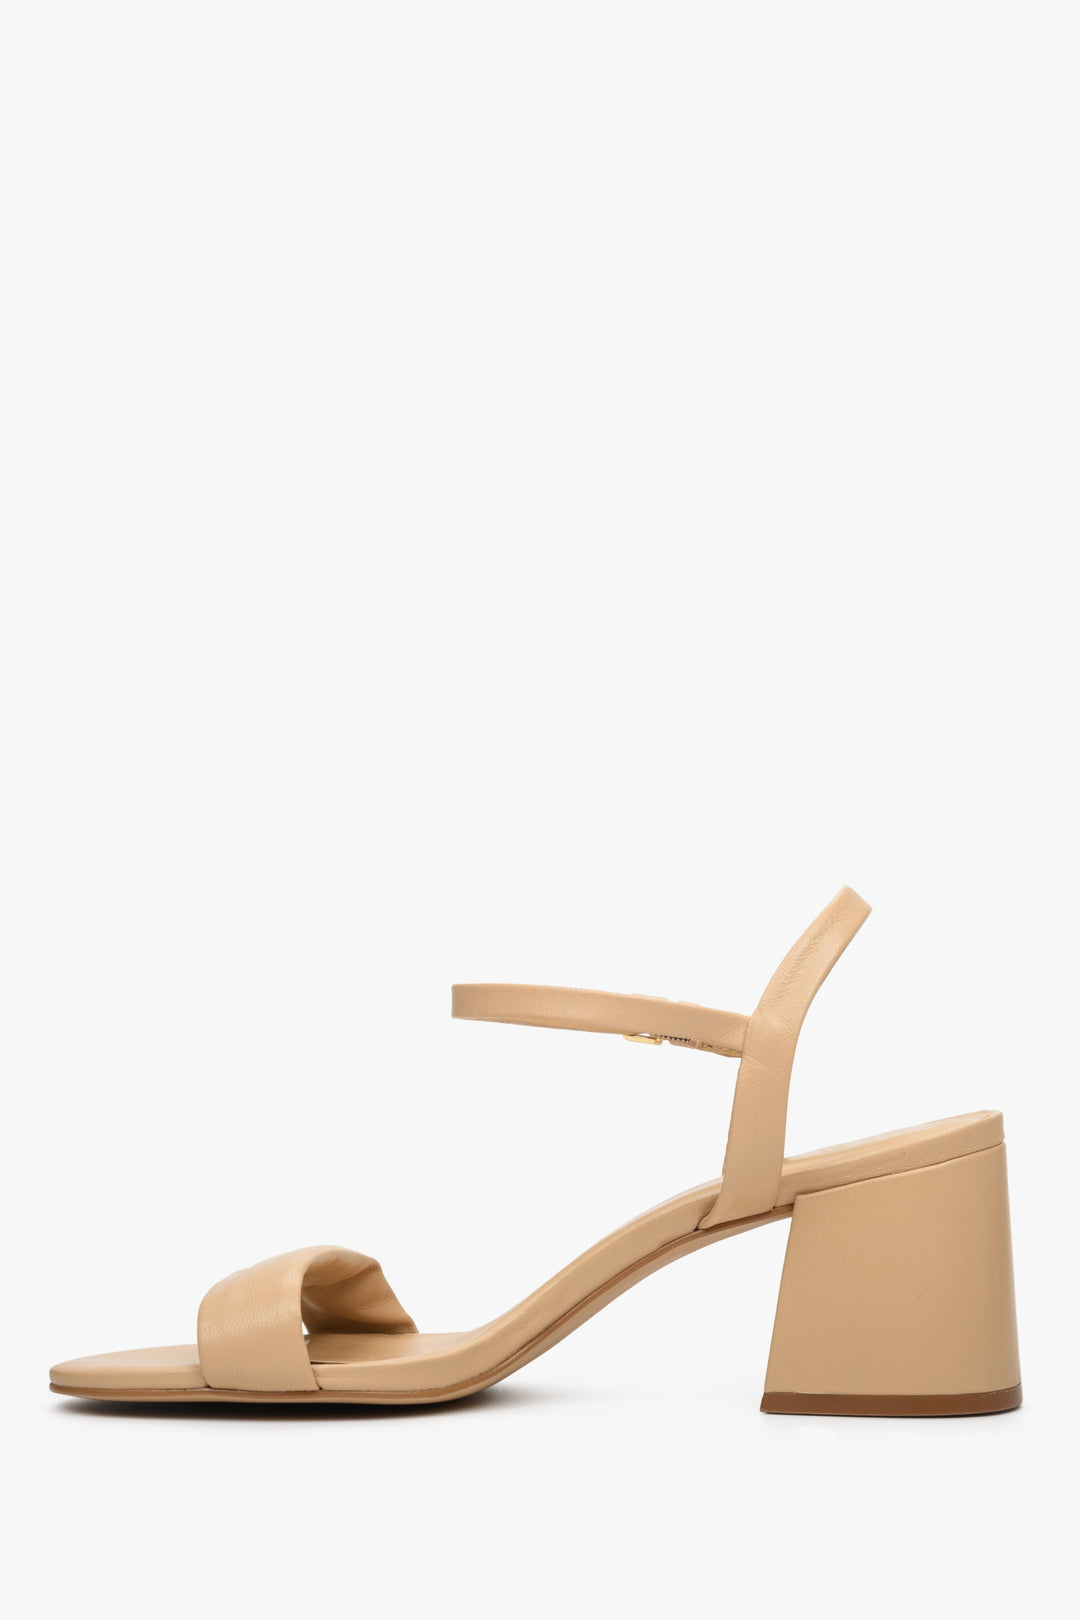 Women's beige leather heeled sandals by Estro - shoe profile.